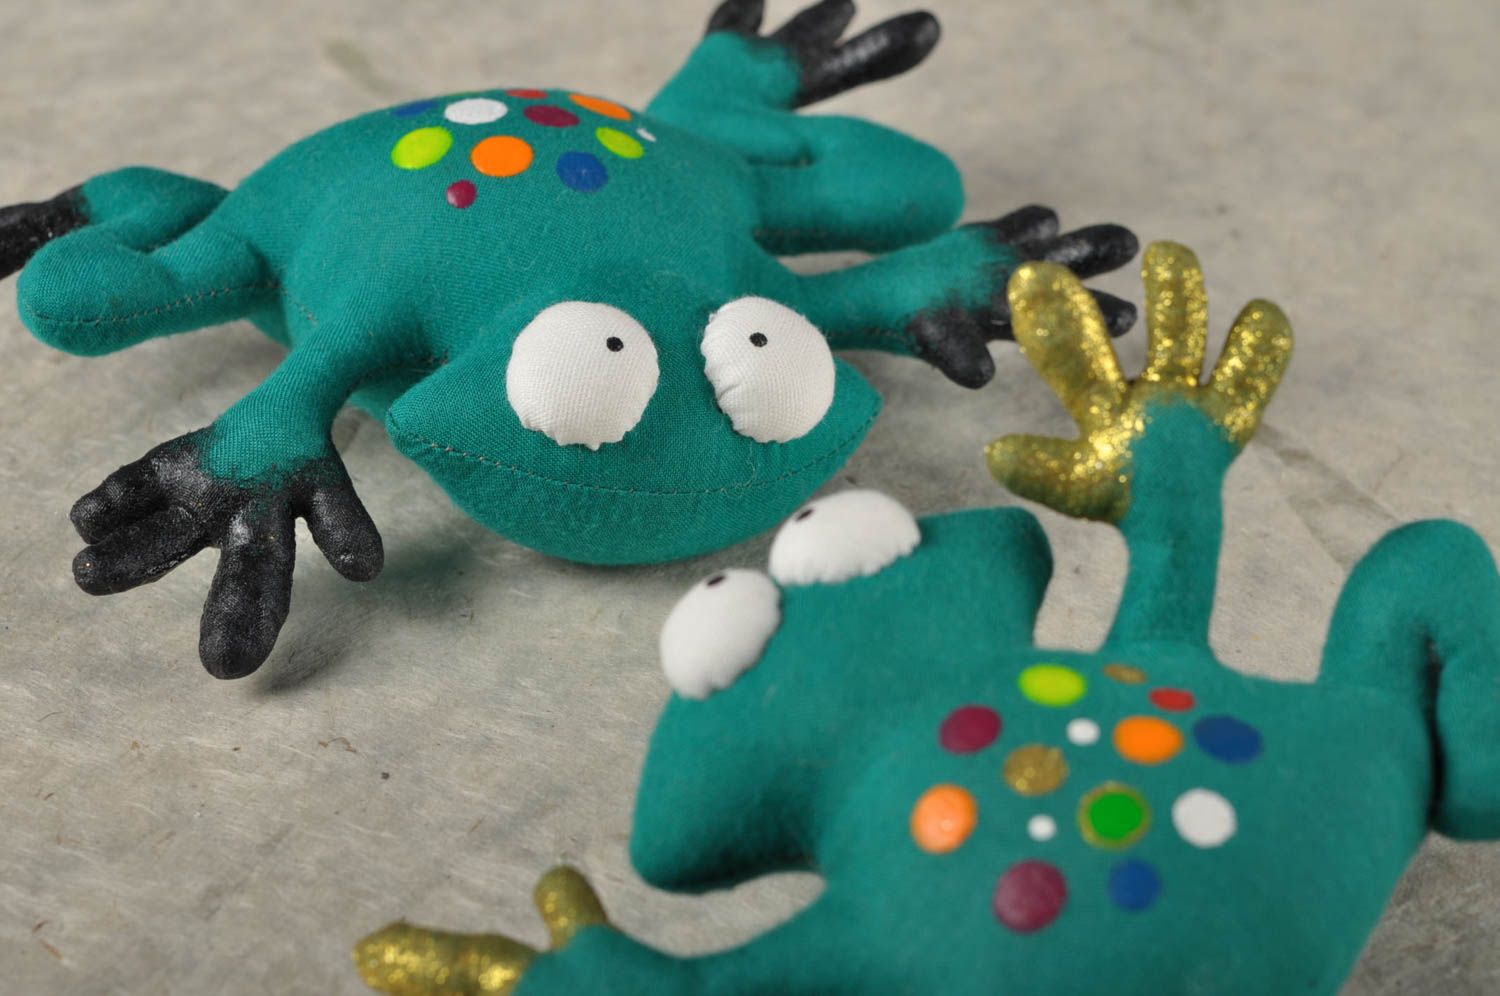 Handmade toy for children designer soft toy for kids nursery decor ideas photo 3